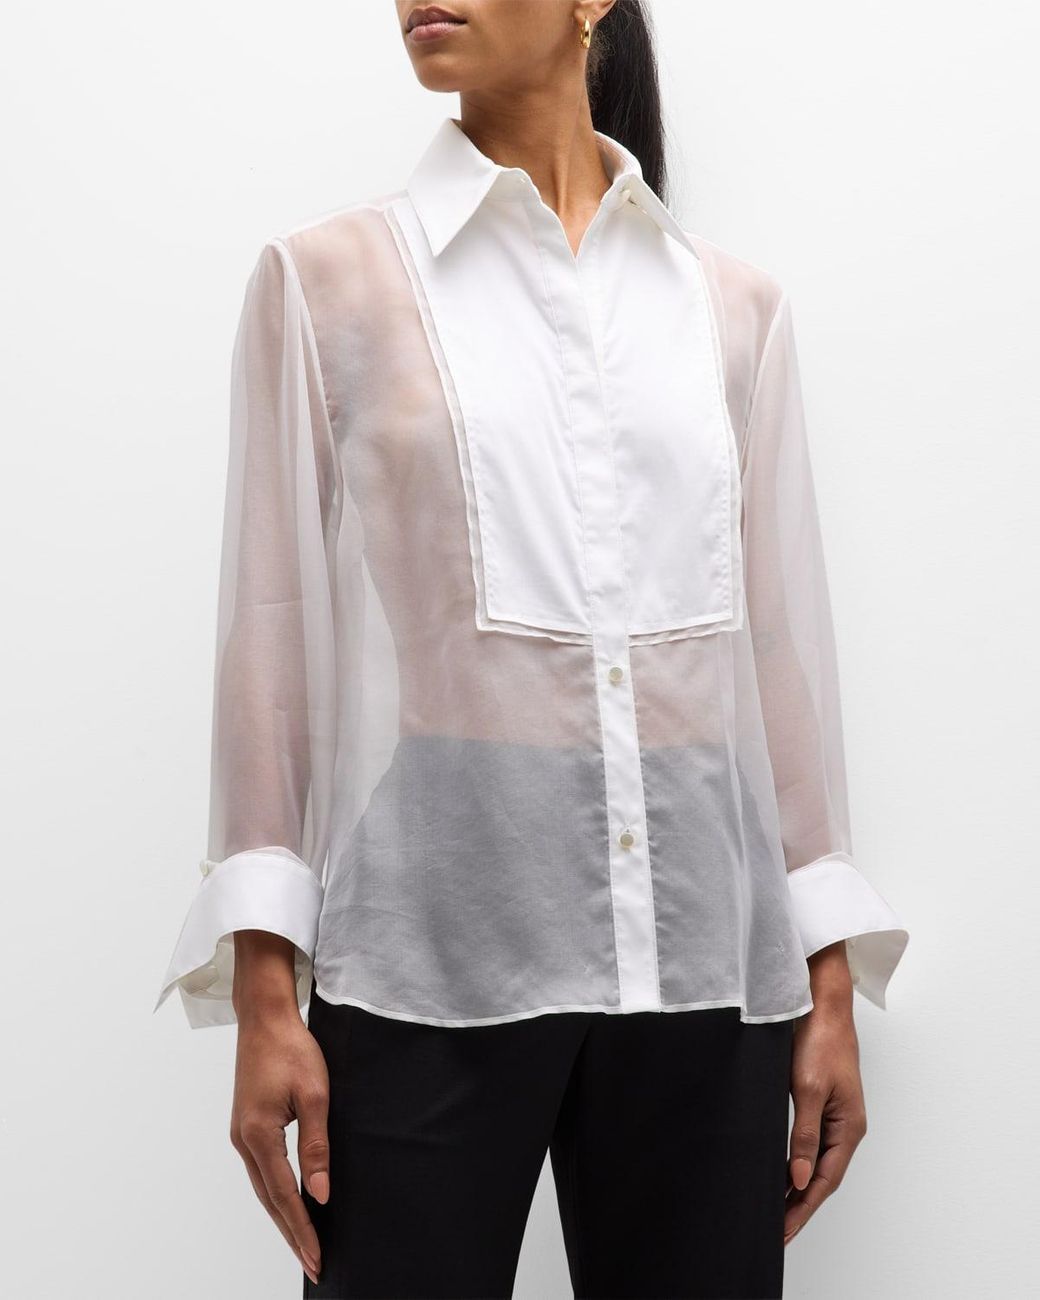 Twp Then Again Silk Organza Tuxedo Shirt in White | Lyst